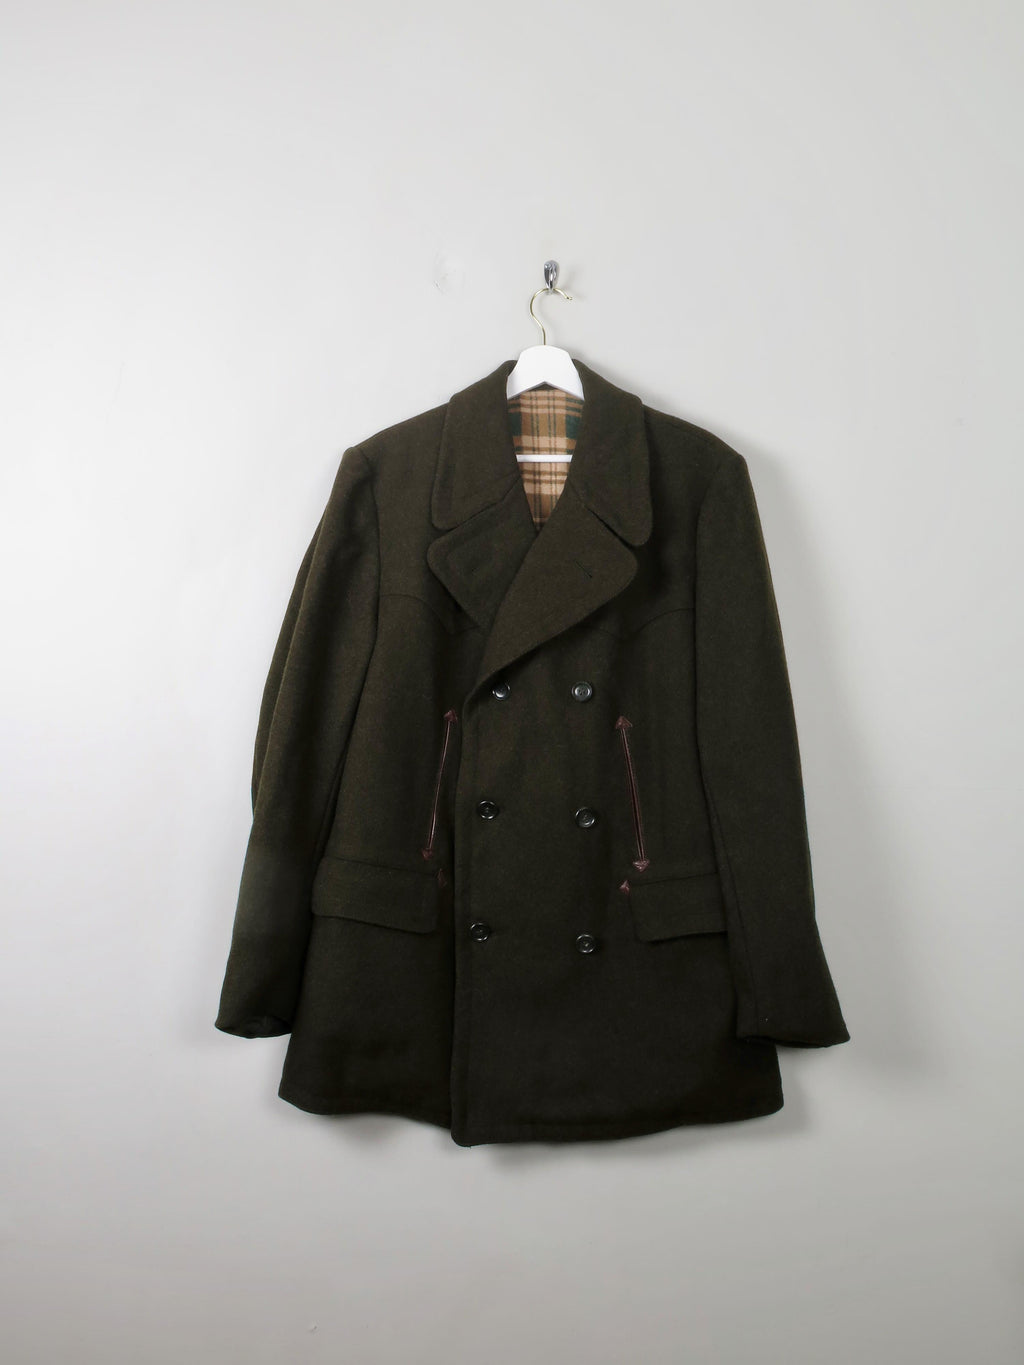 Men's Green Vintage Wool Pea Coat 44" - The Harlequin